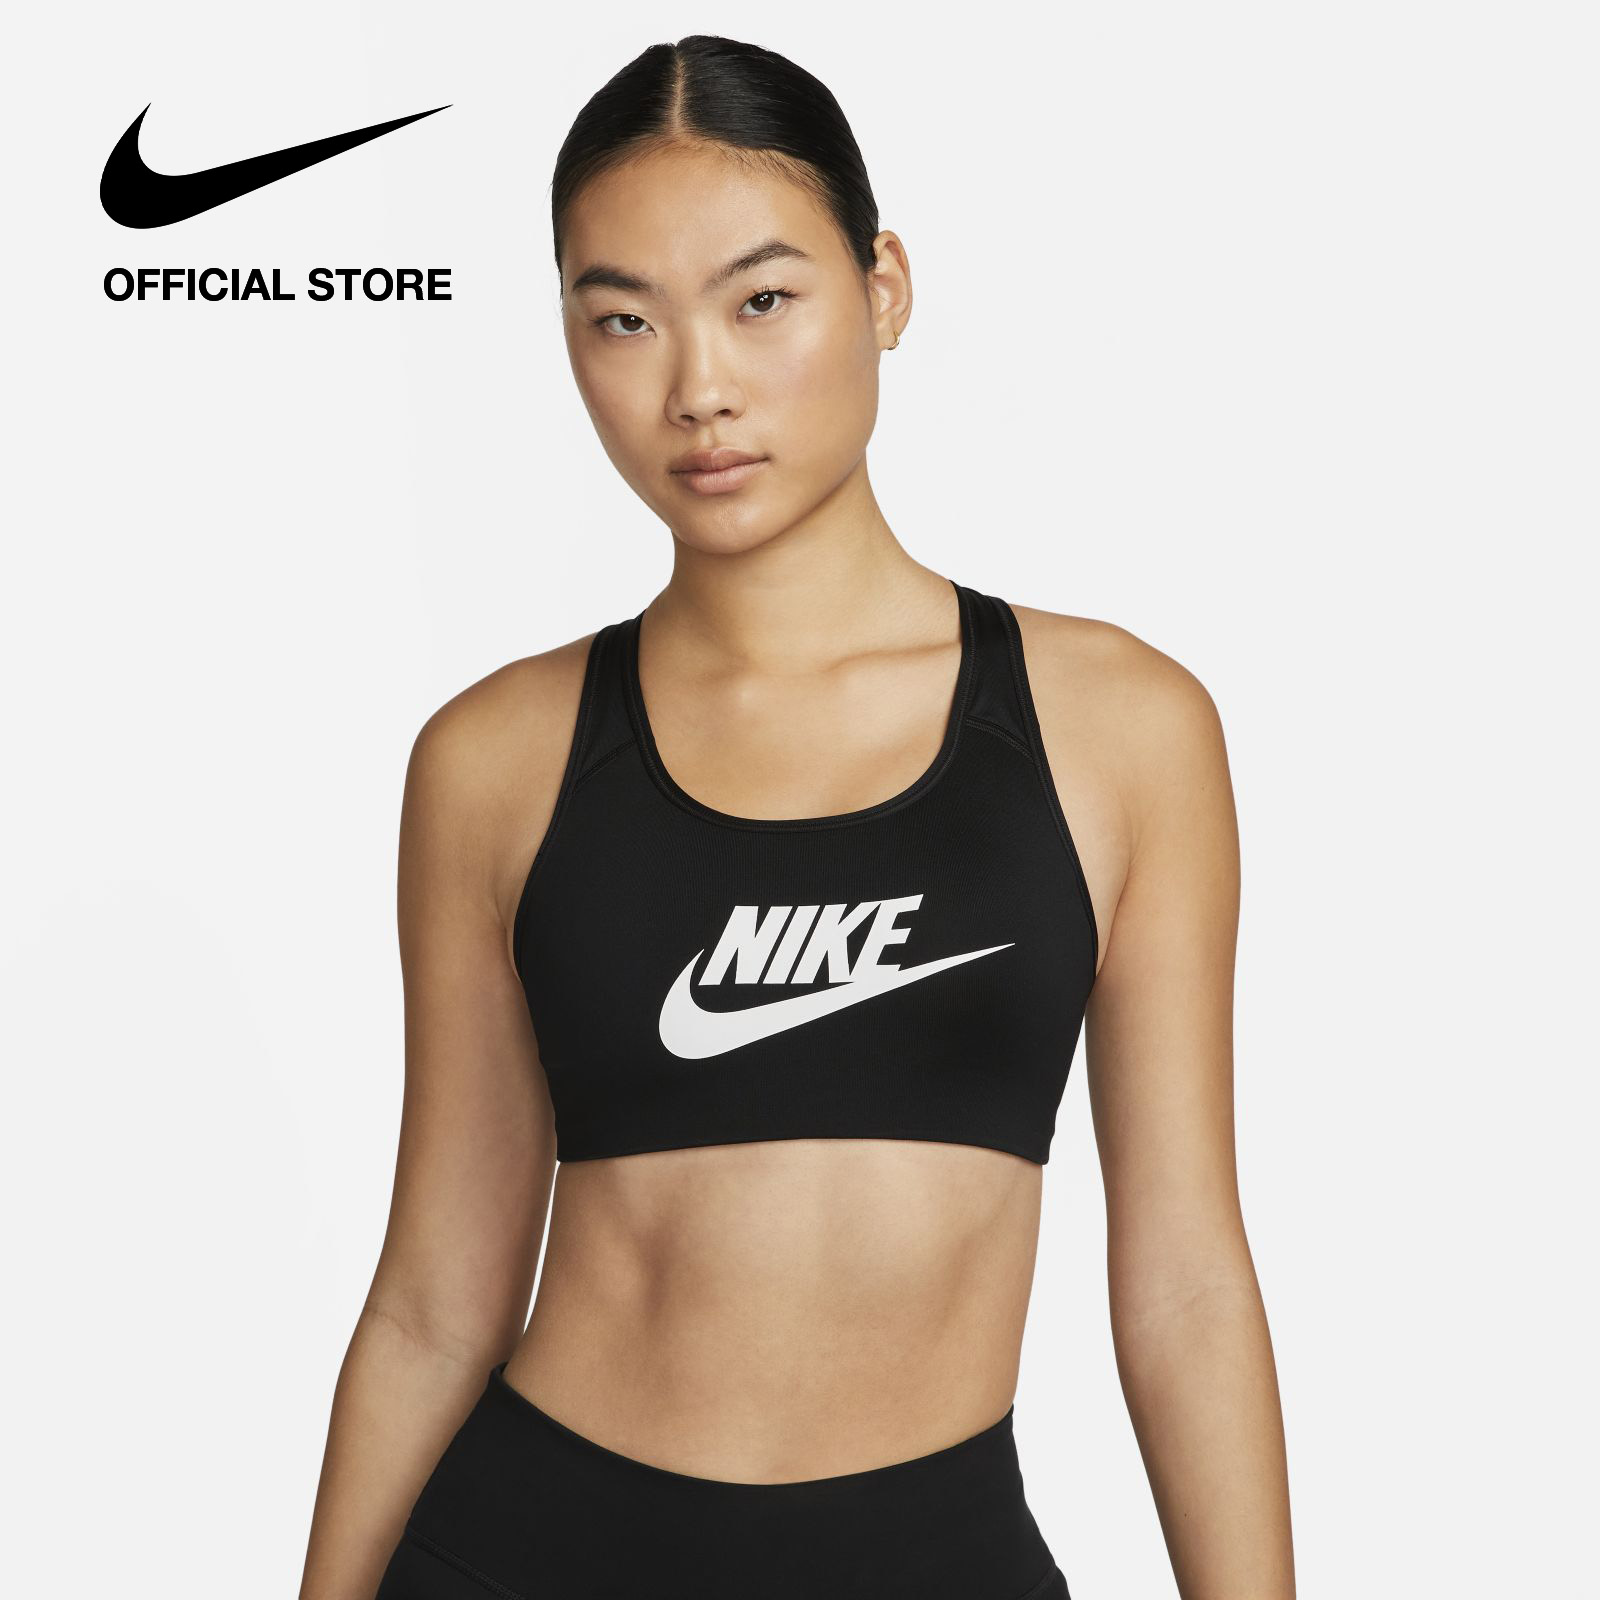 Nike Women's Swoosh Medium-Support Padded Sports Bra - Violet Dust